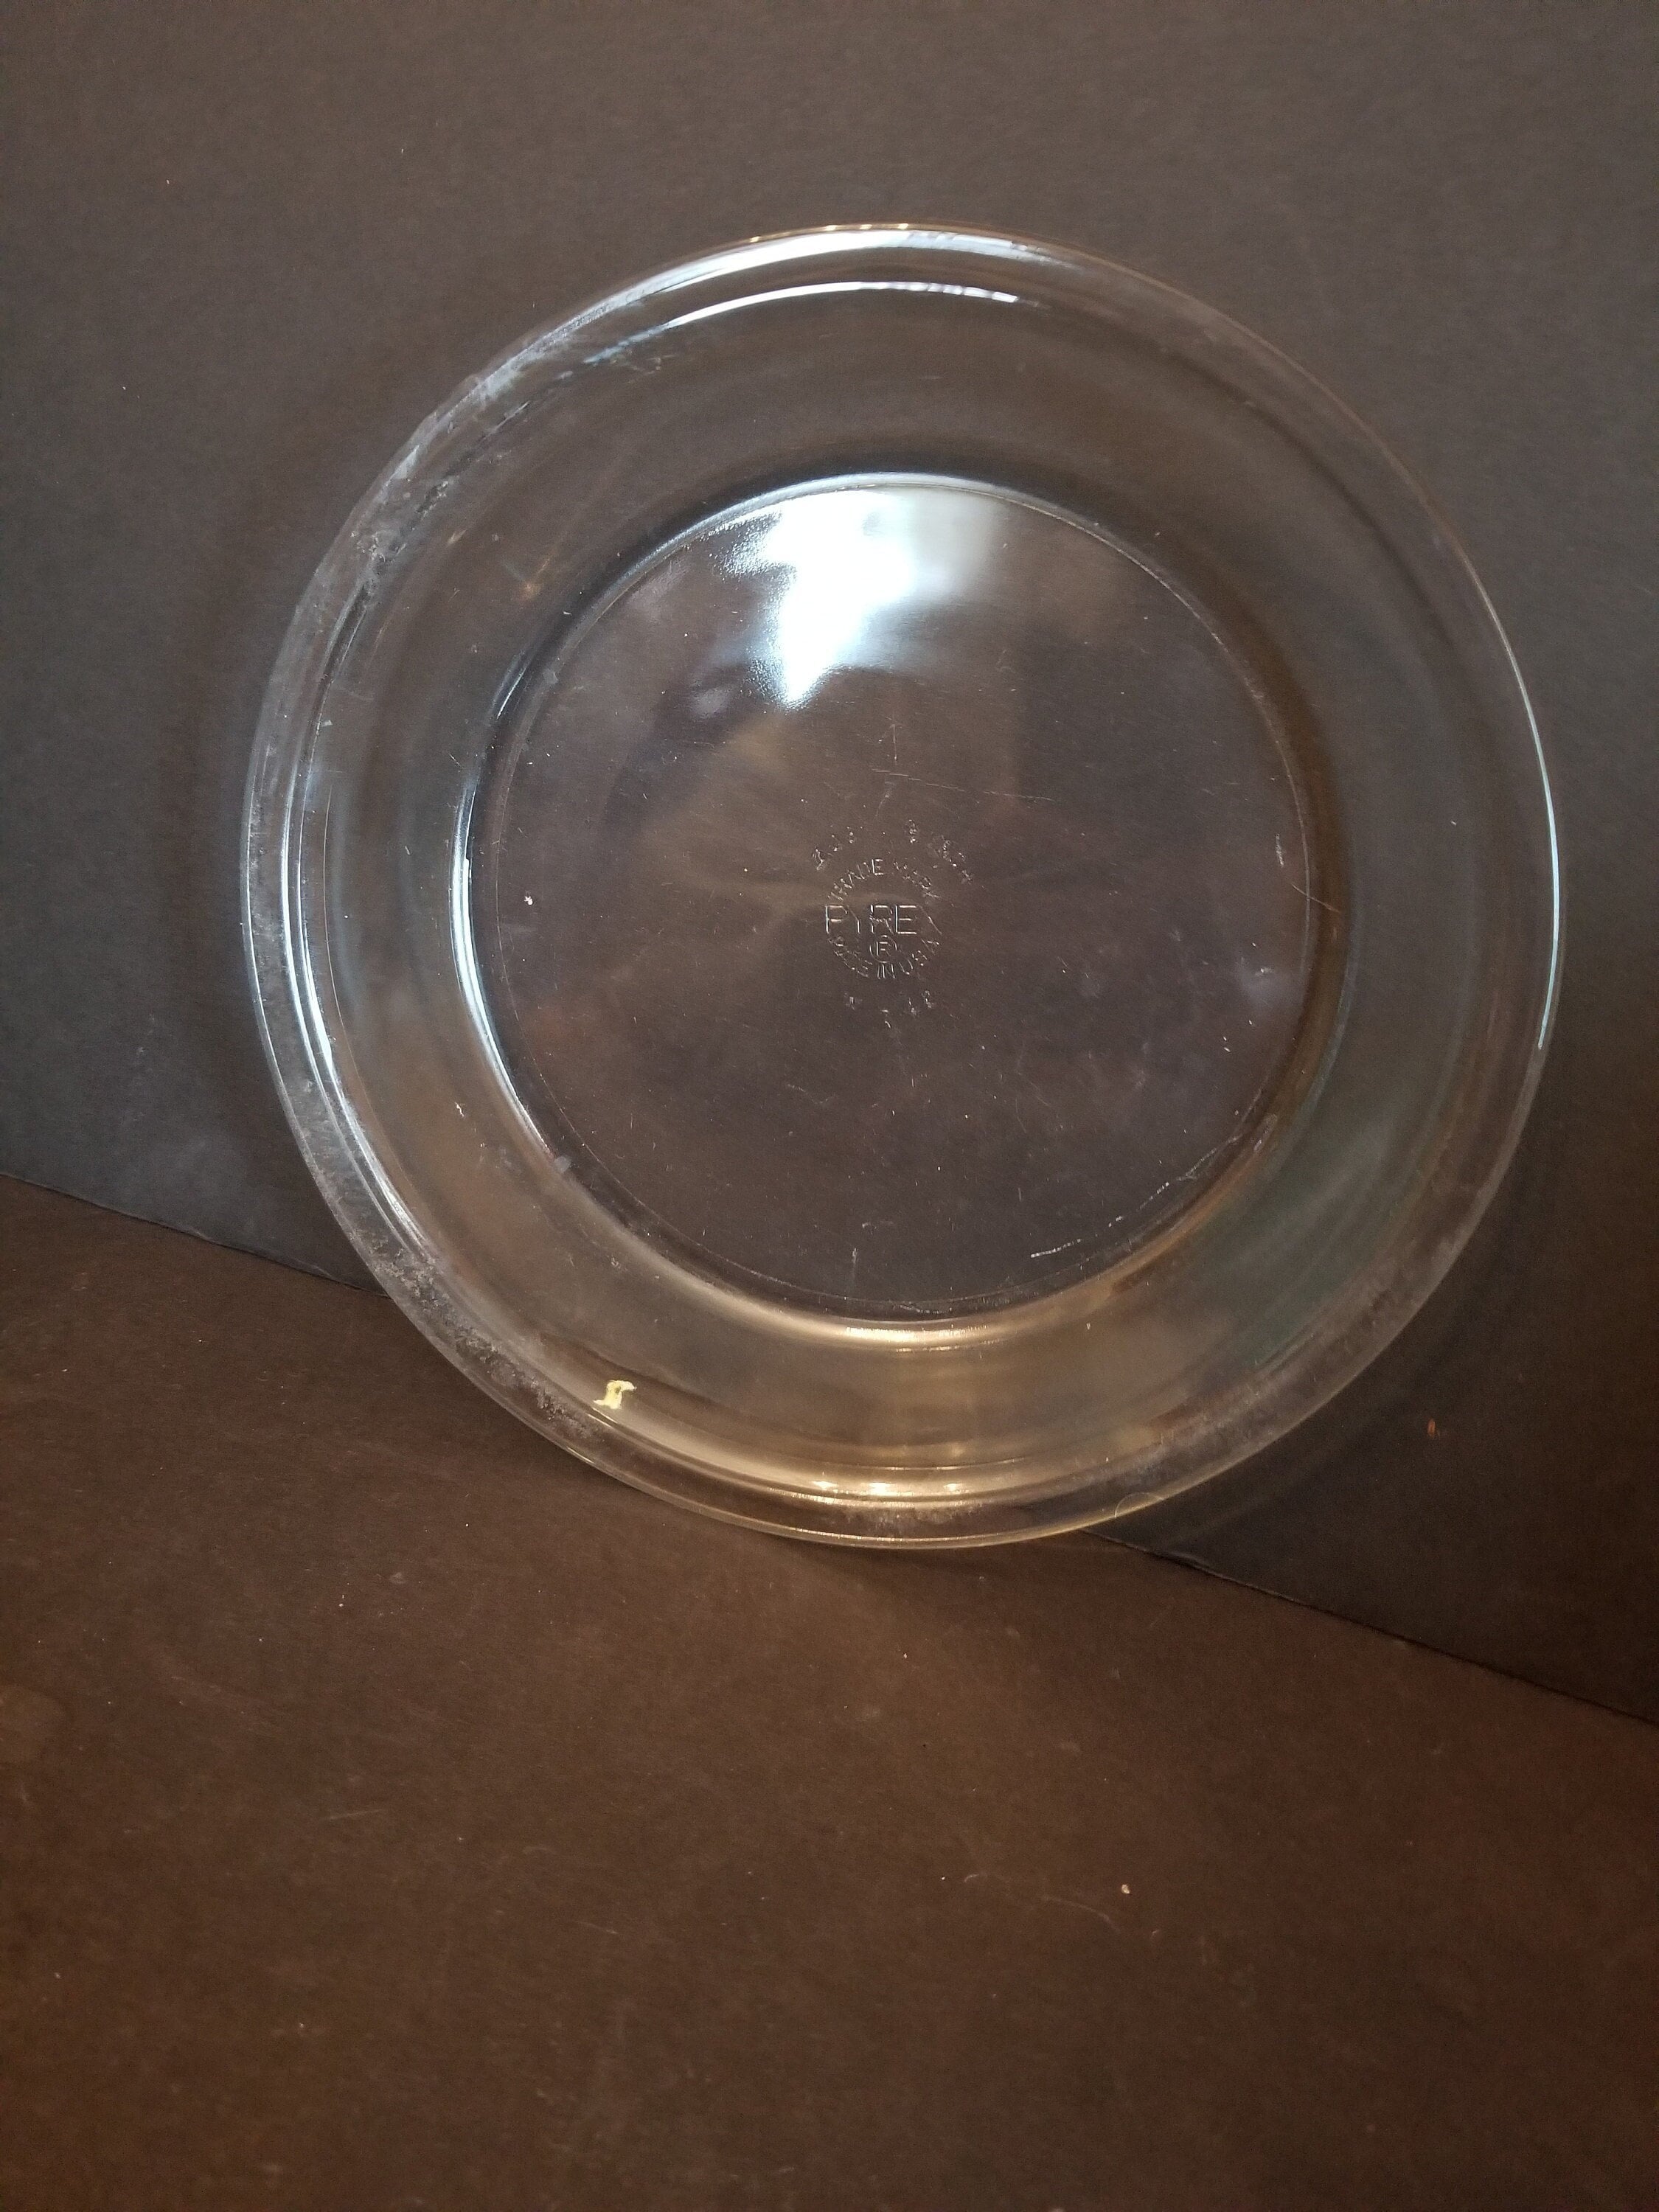 Pyrex Baking Dish, Divided Glass, 1.7 Quart, 8 Inch x 12 Inch